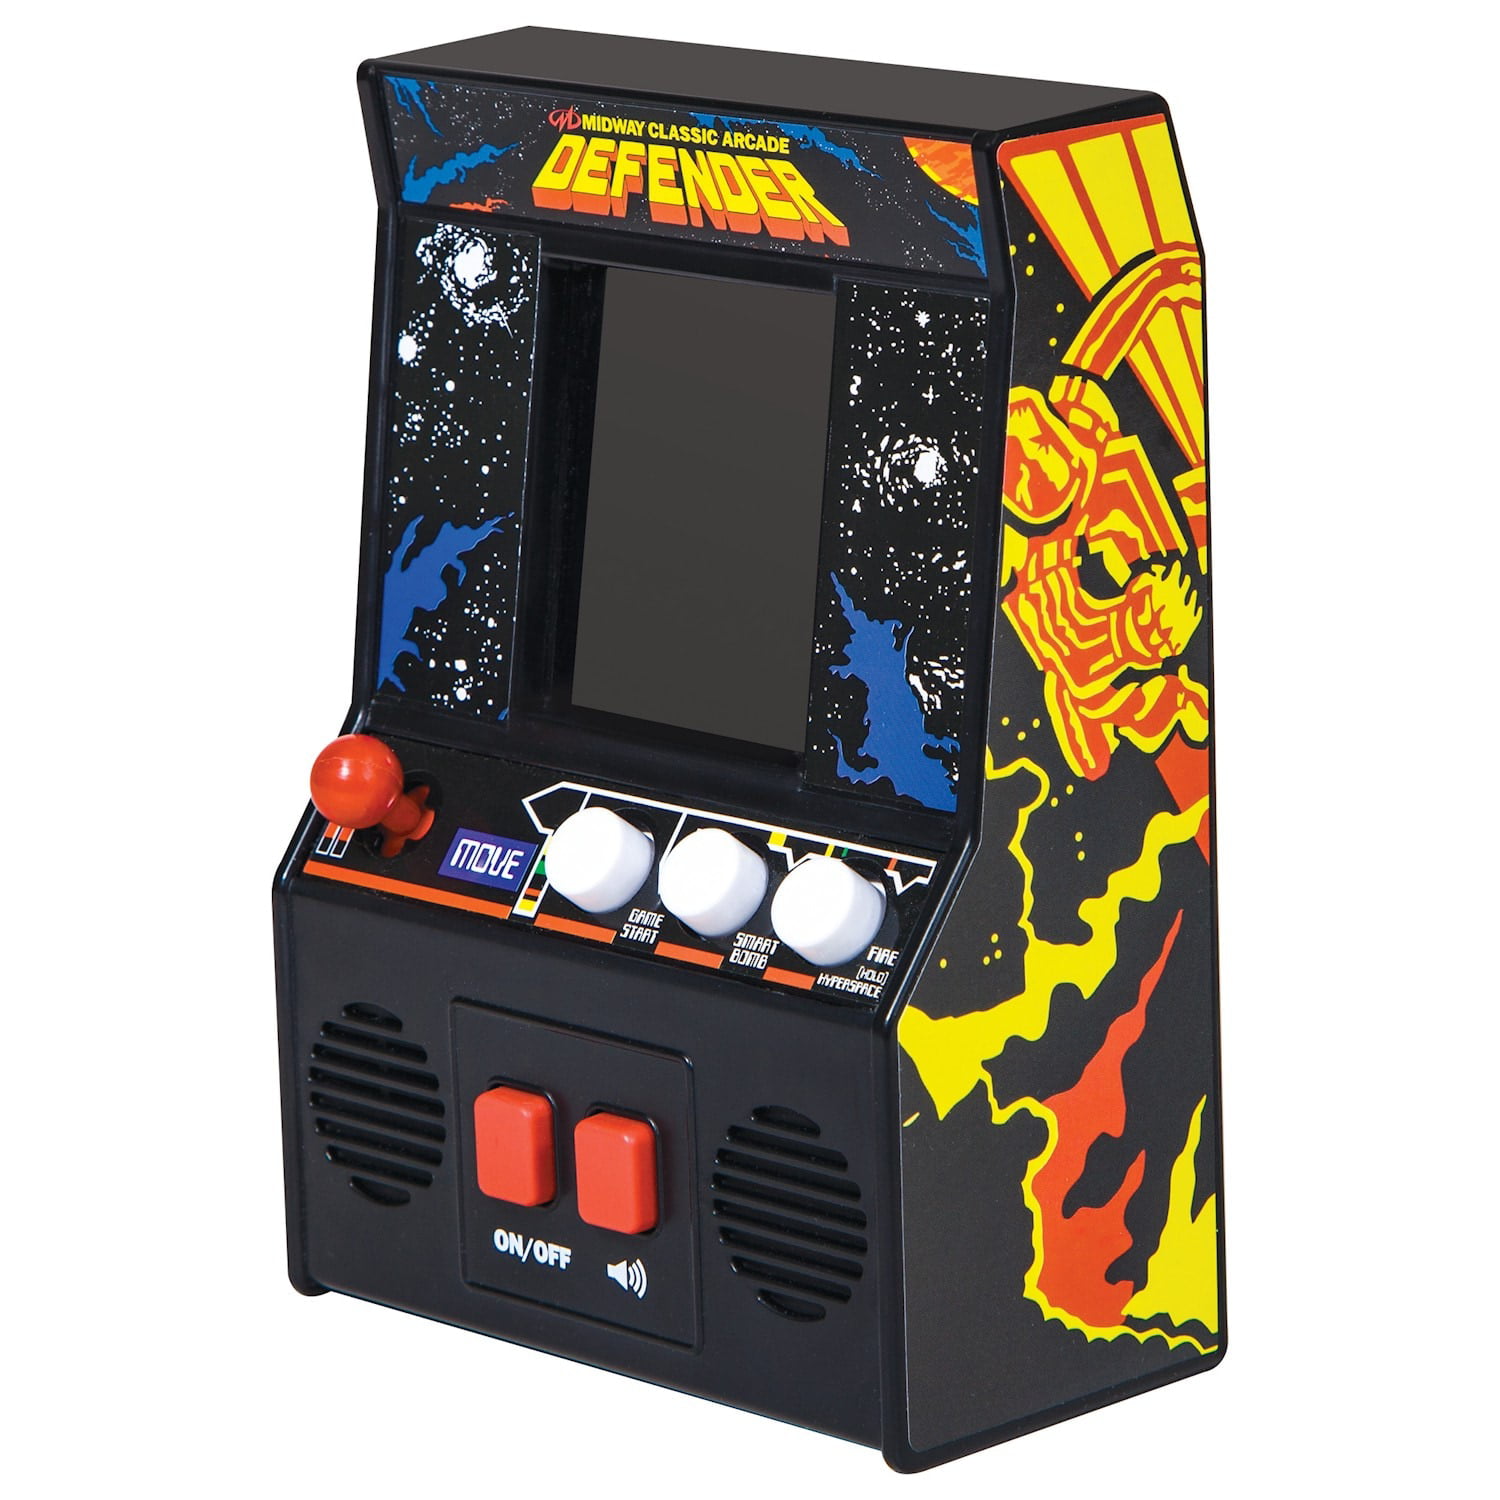 Defender #17 Arcade Classics Midway Mini Arcade Game Handheld Retro Video Game 